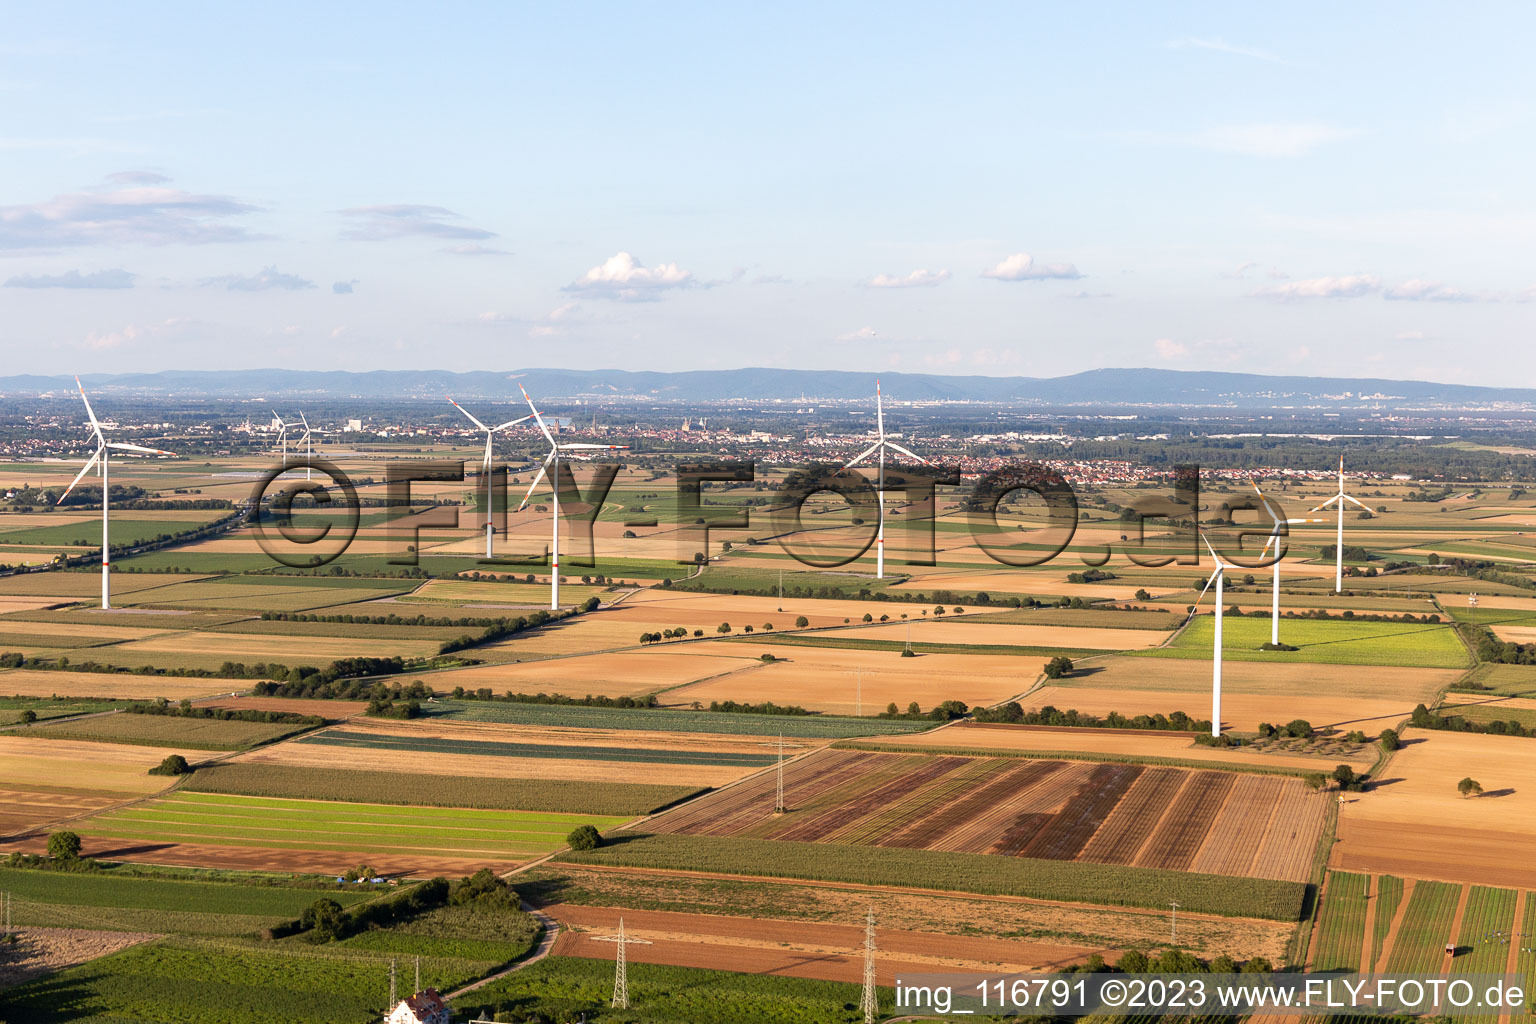 Wind turbines in the district Heiligenstein in Römerberg in the state Rhineland-Palatinate, Germany